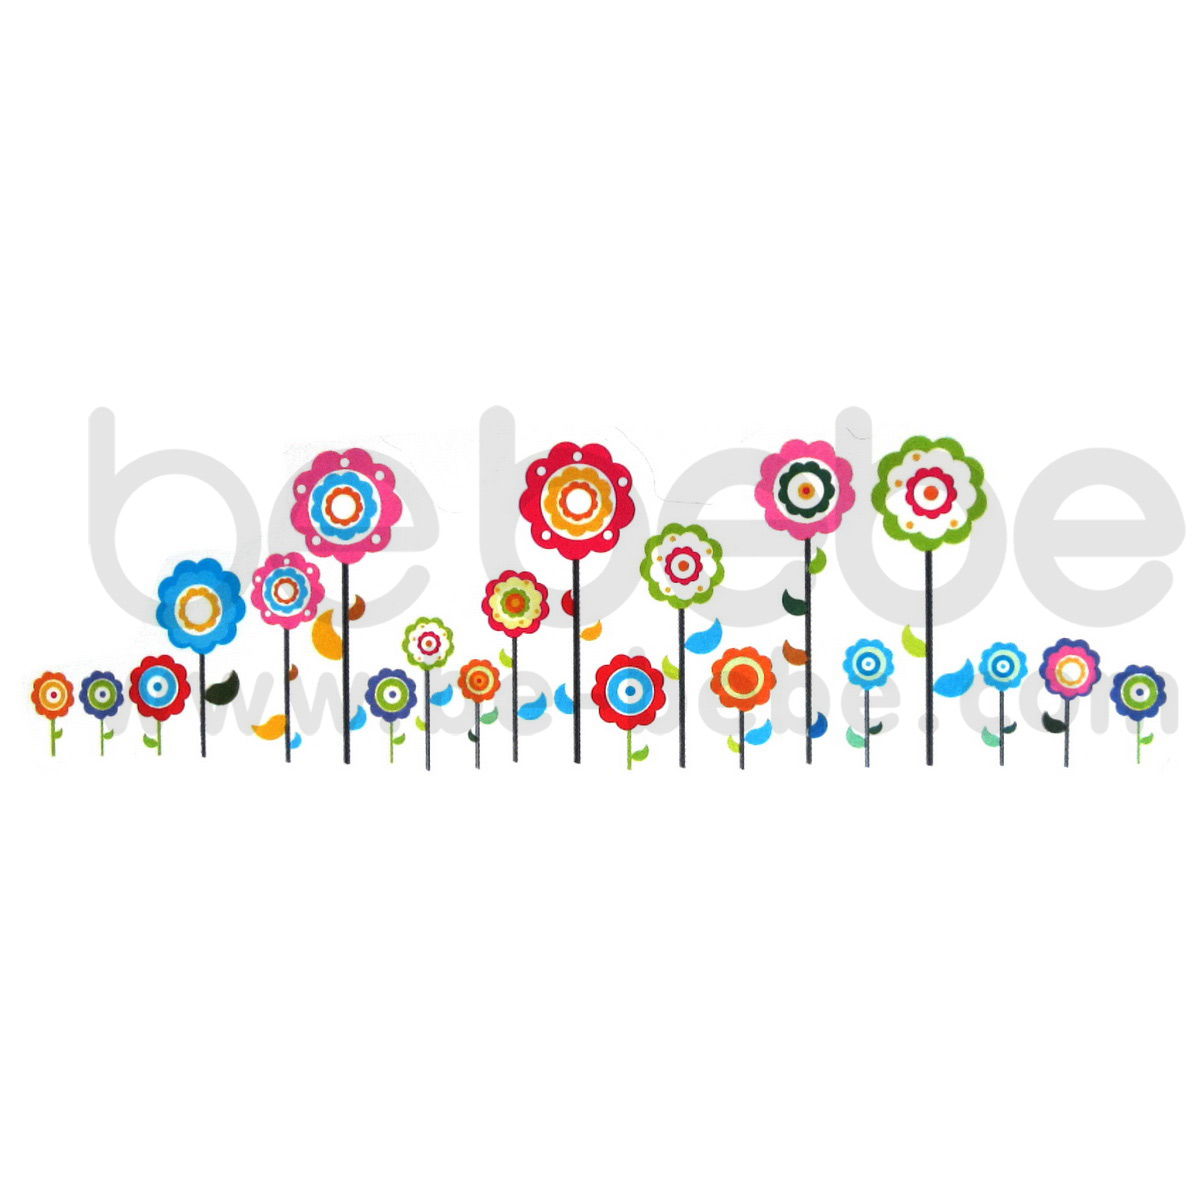 be bebe : Wall Sticker (60x90cm.) / HL-6804